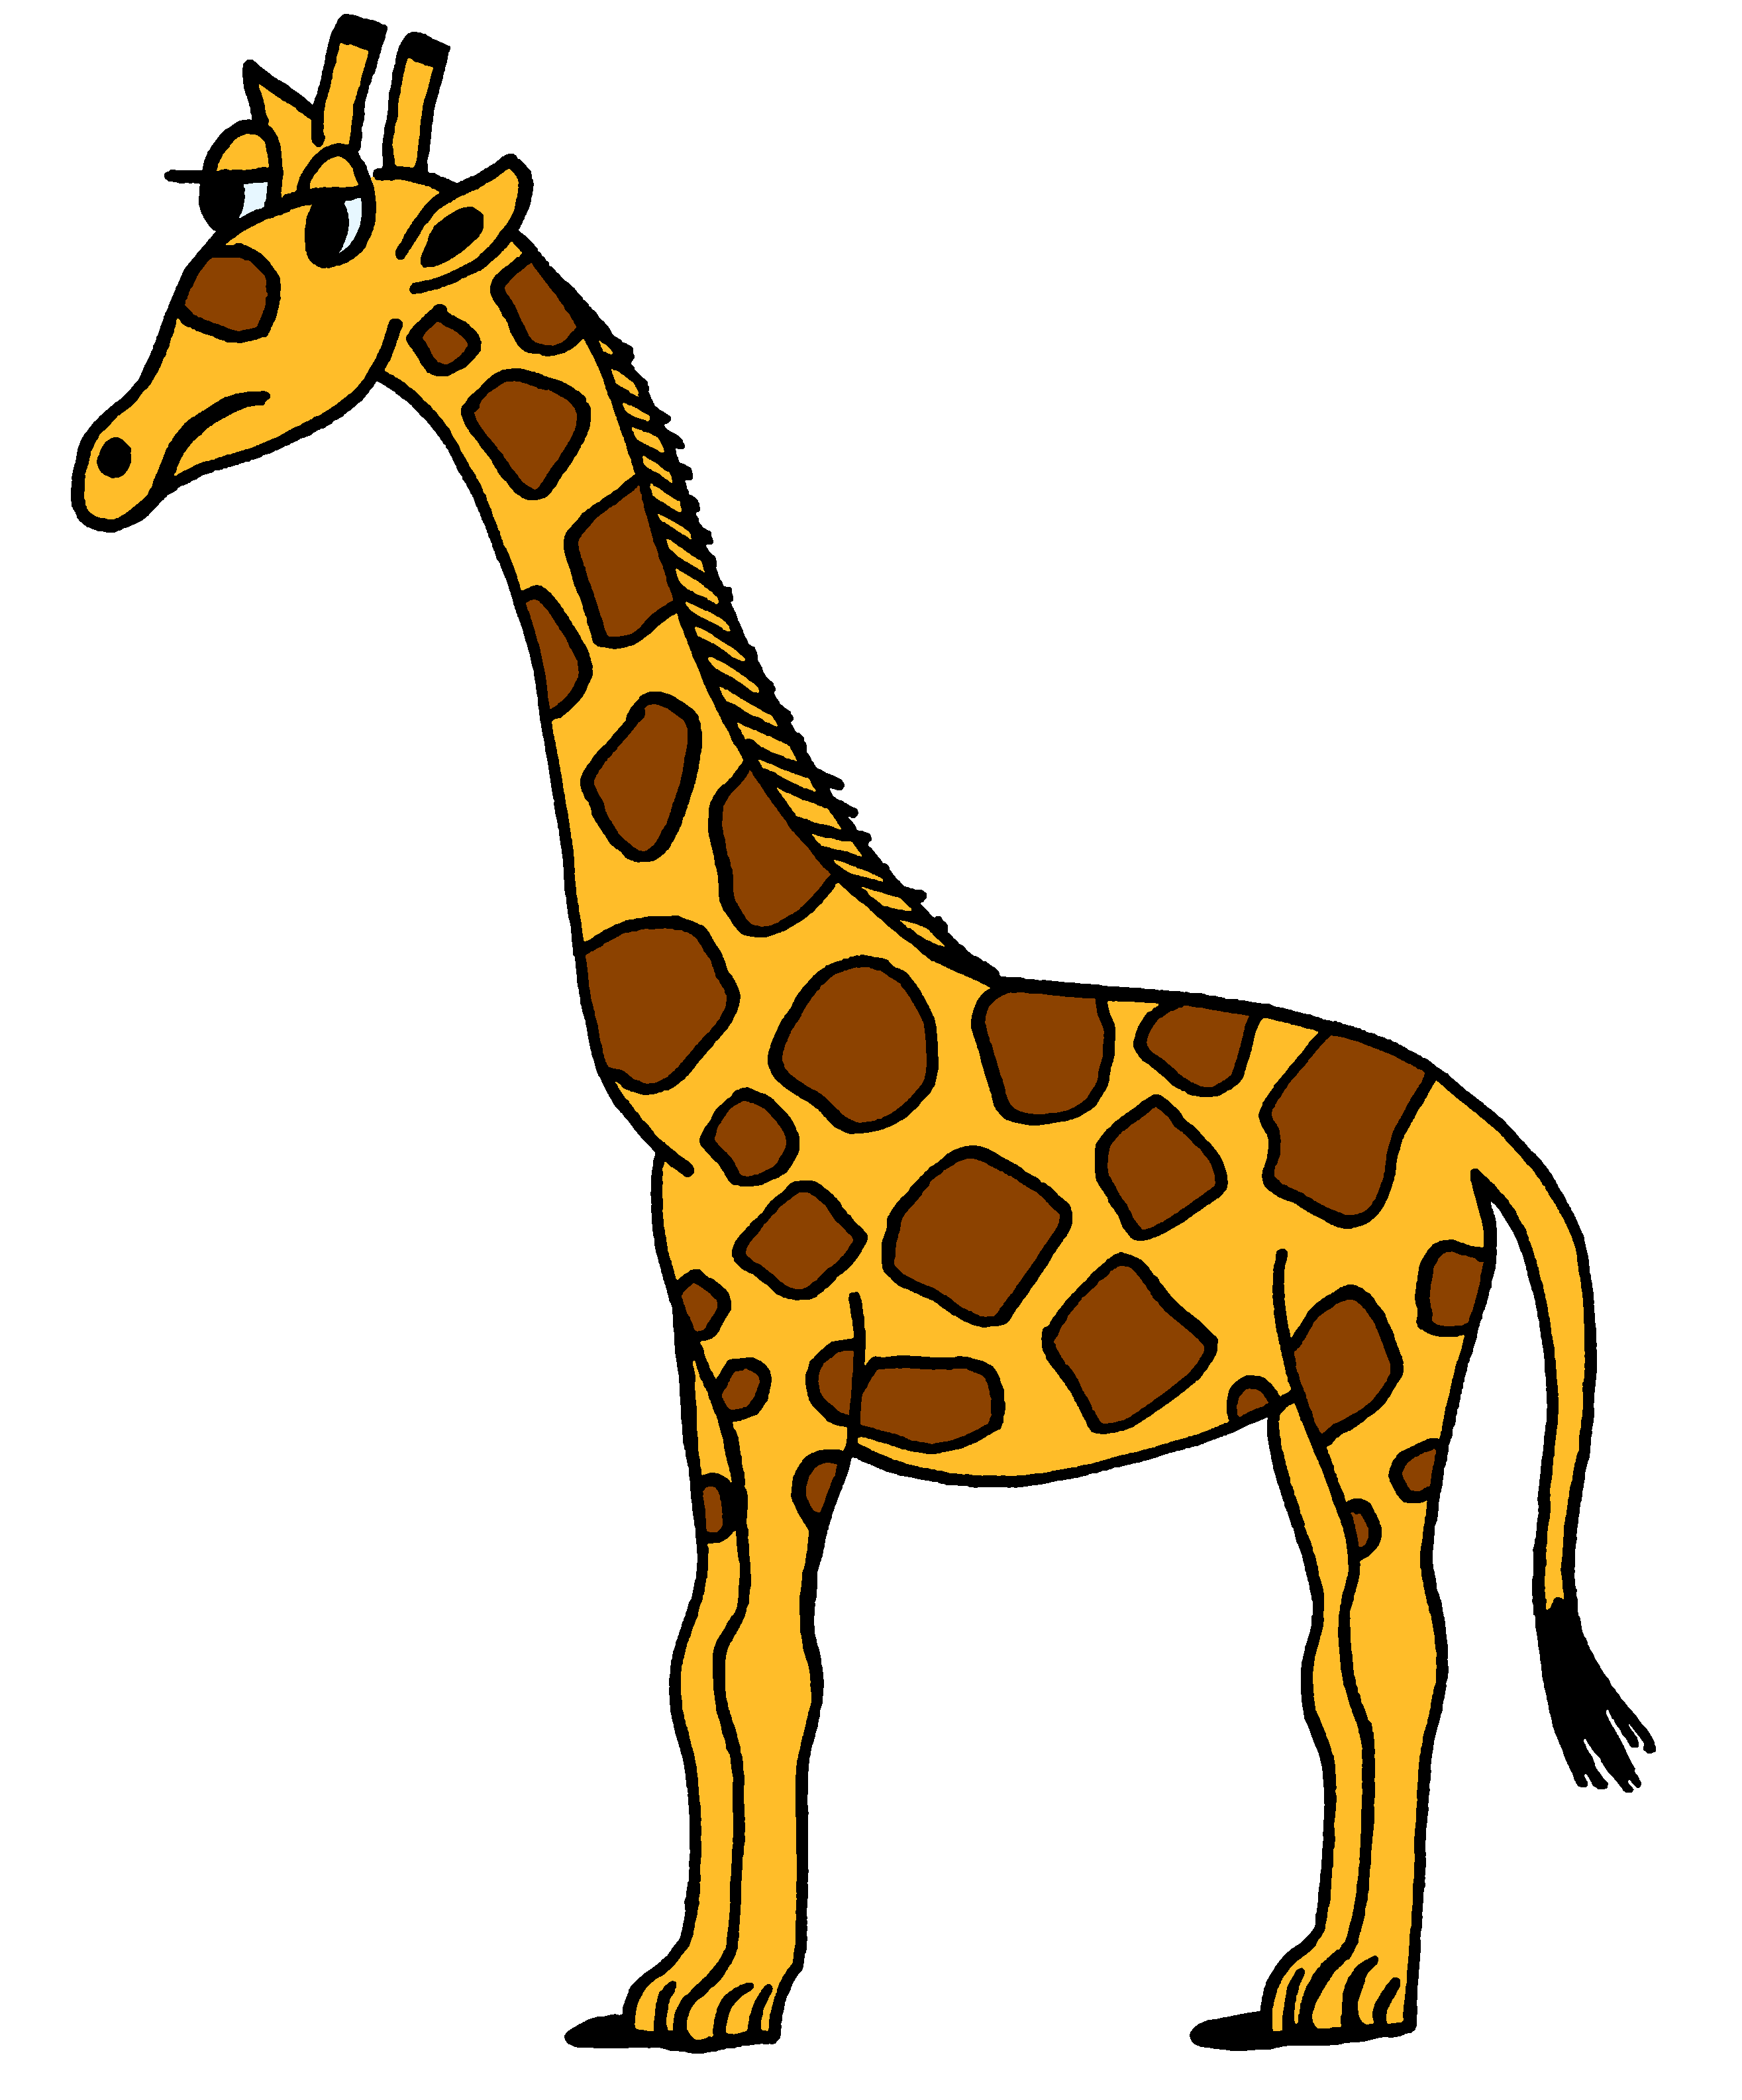 Giraffe clipart cartoon